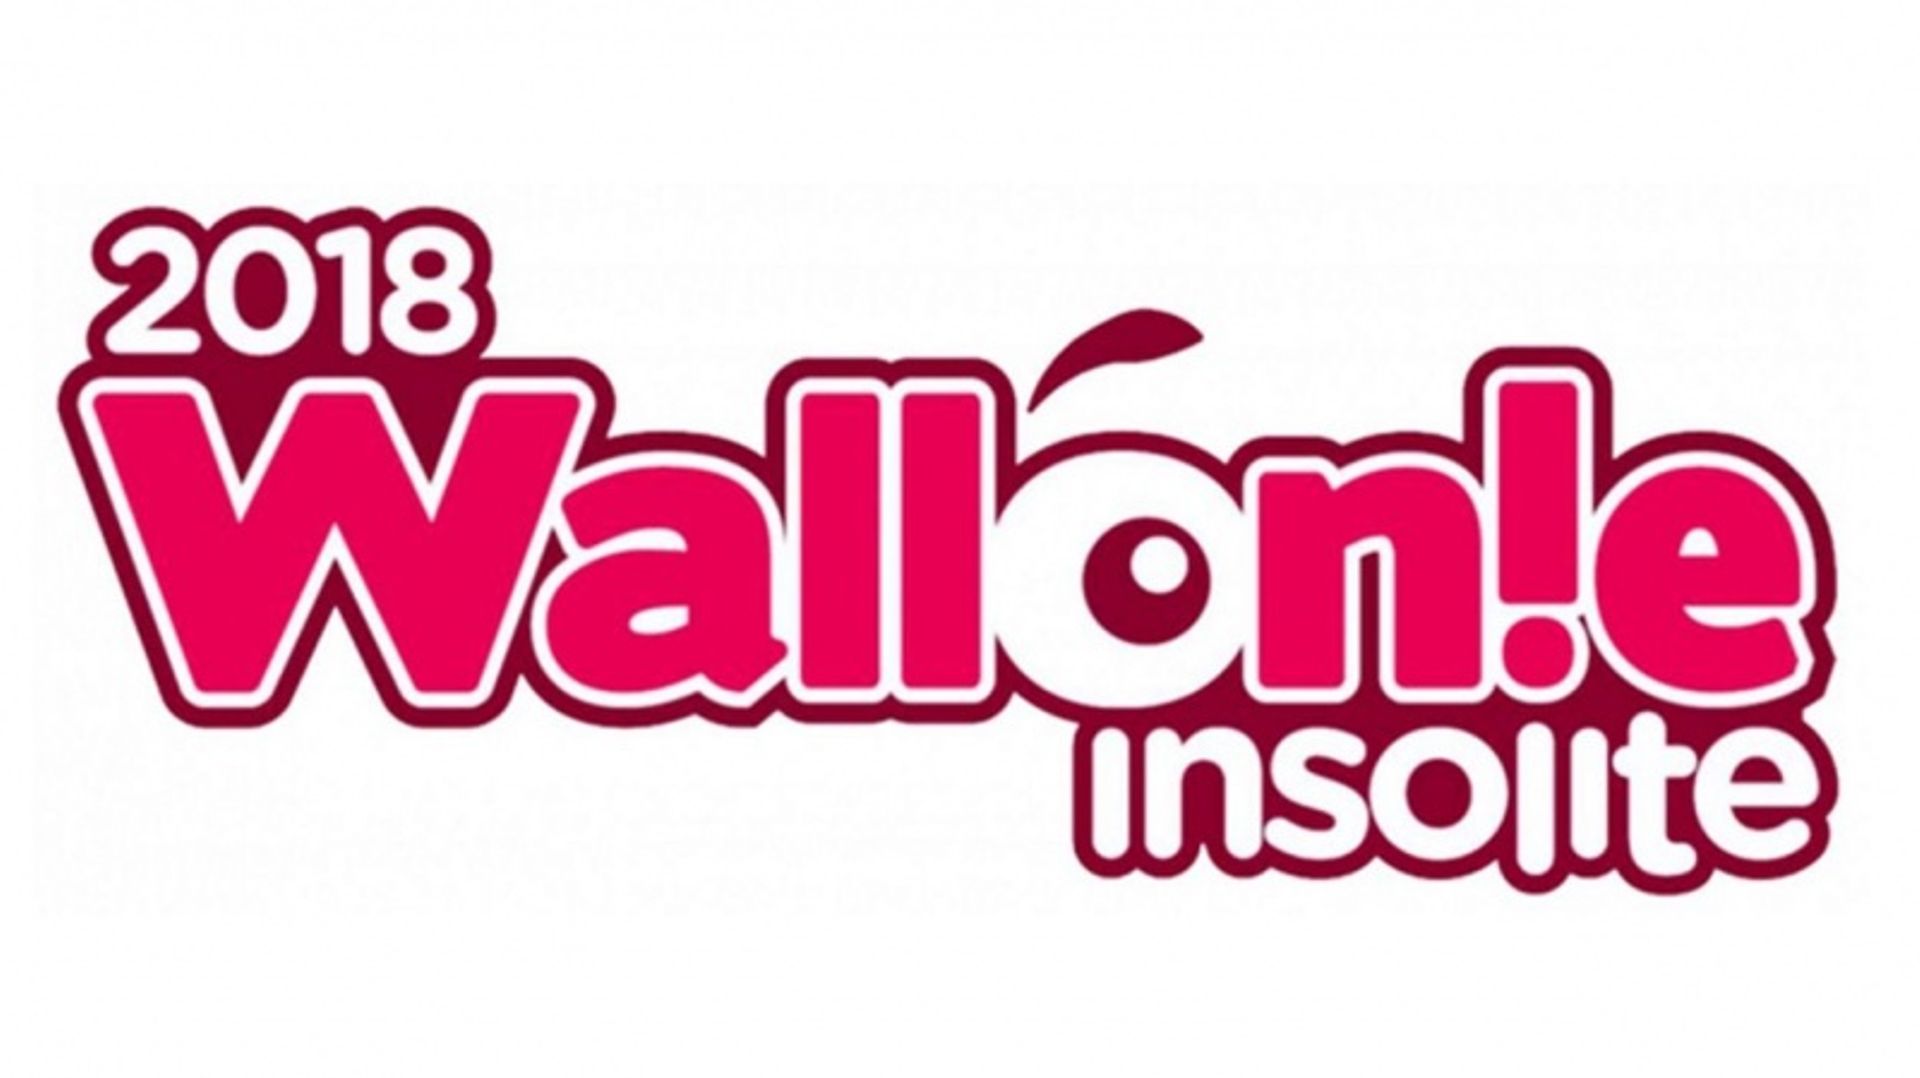 Wallonie insolite 2018